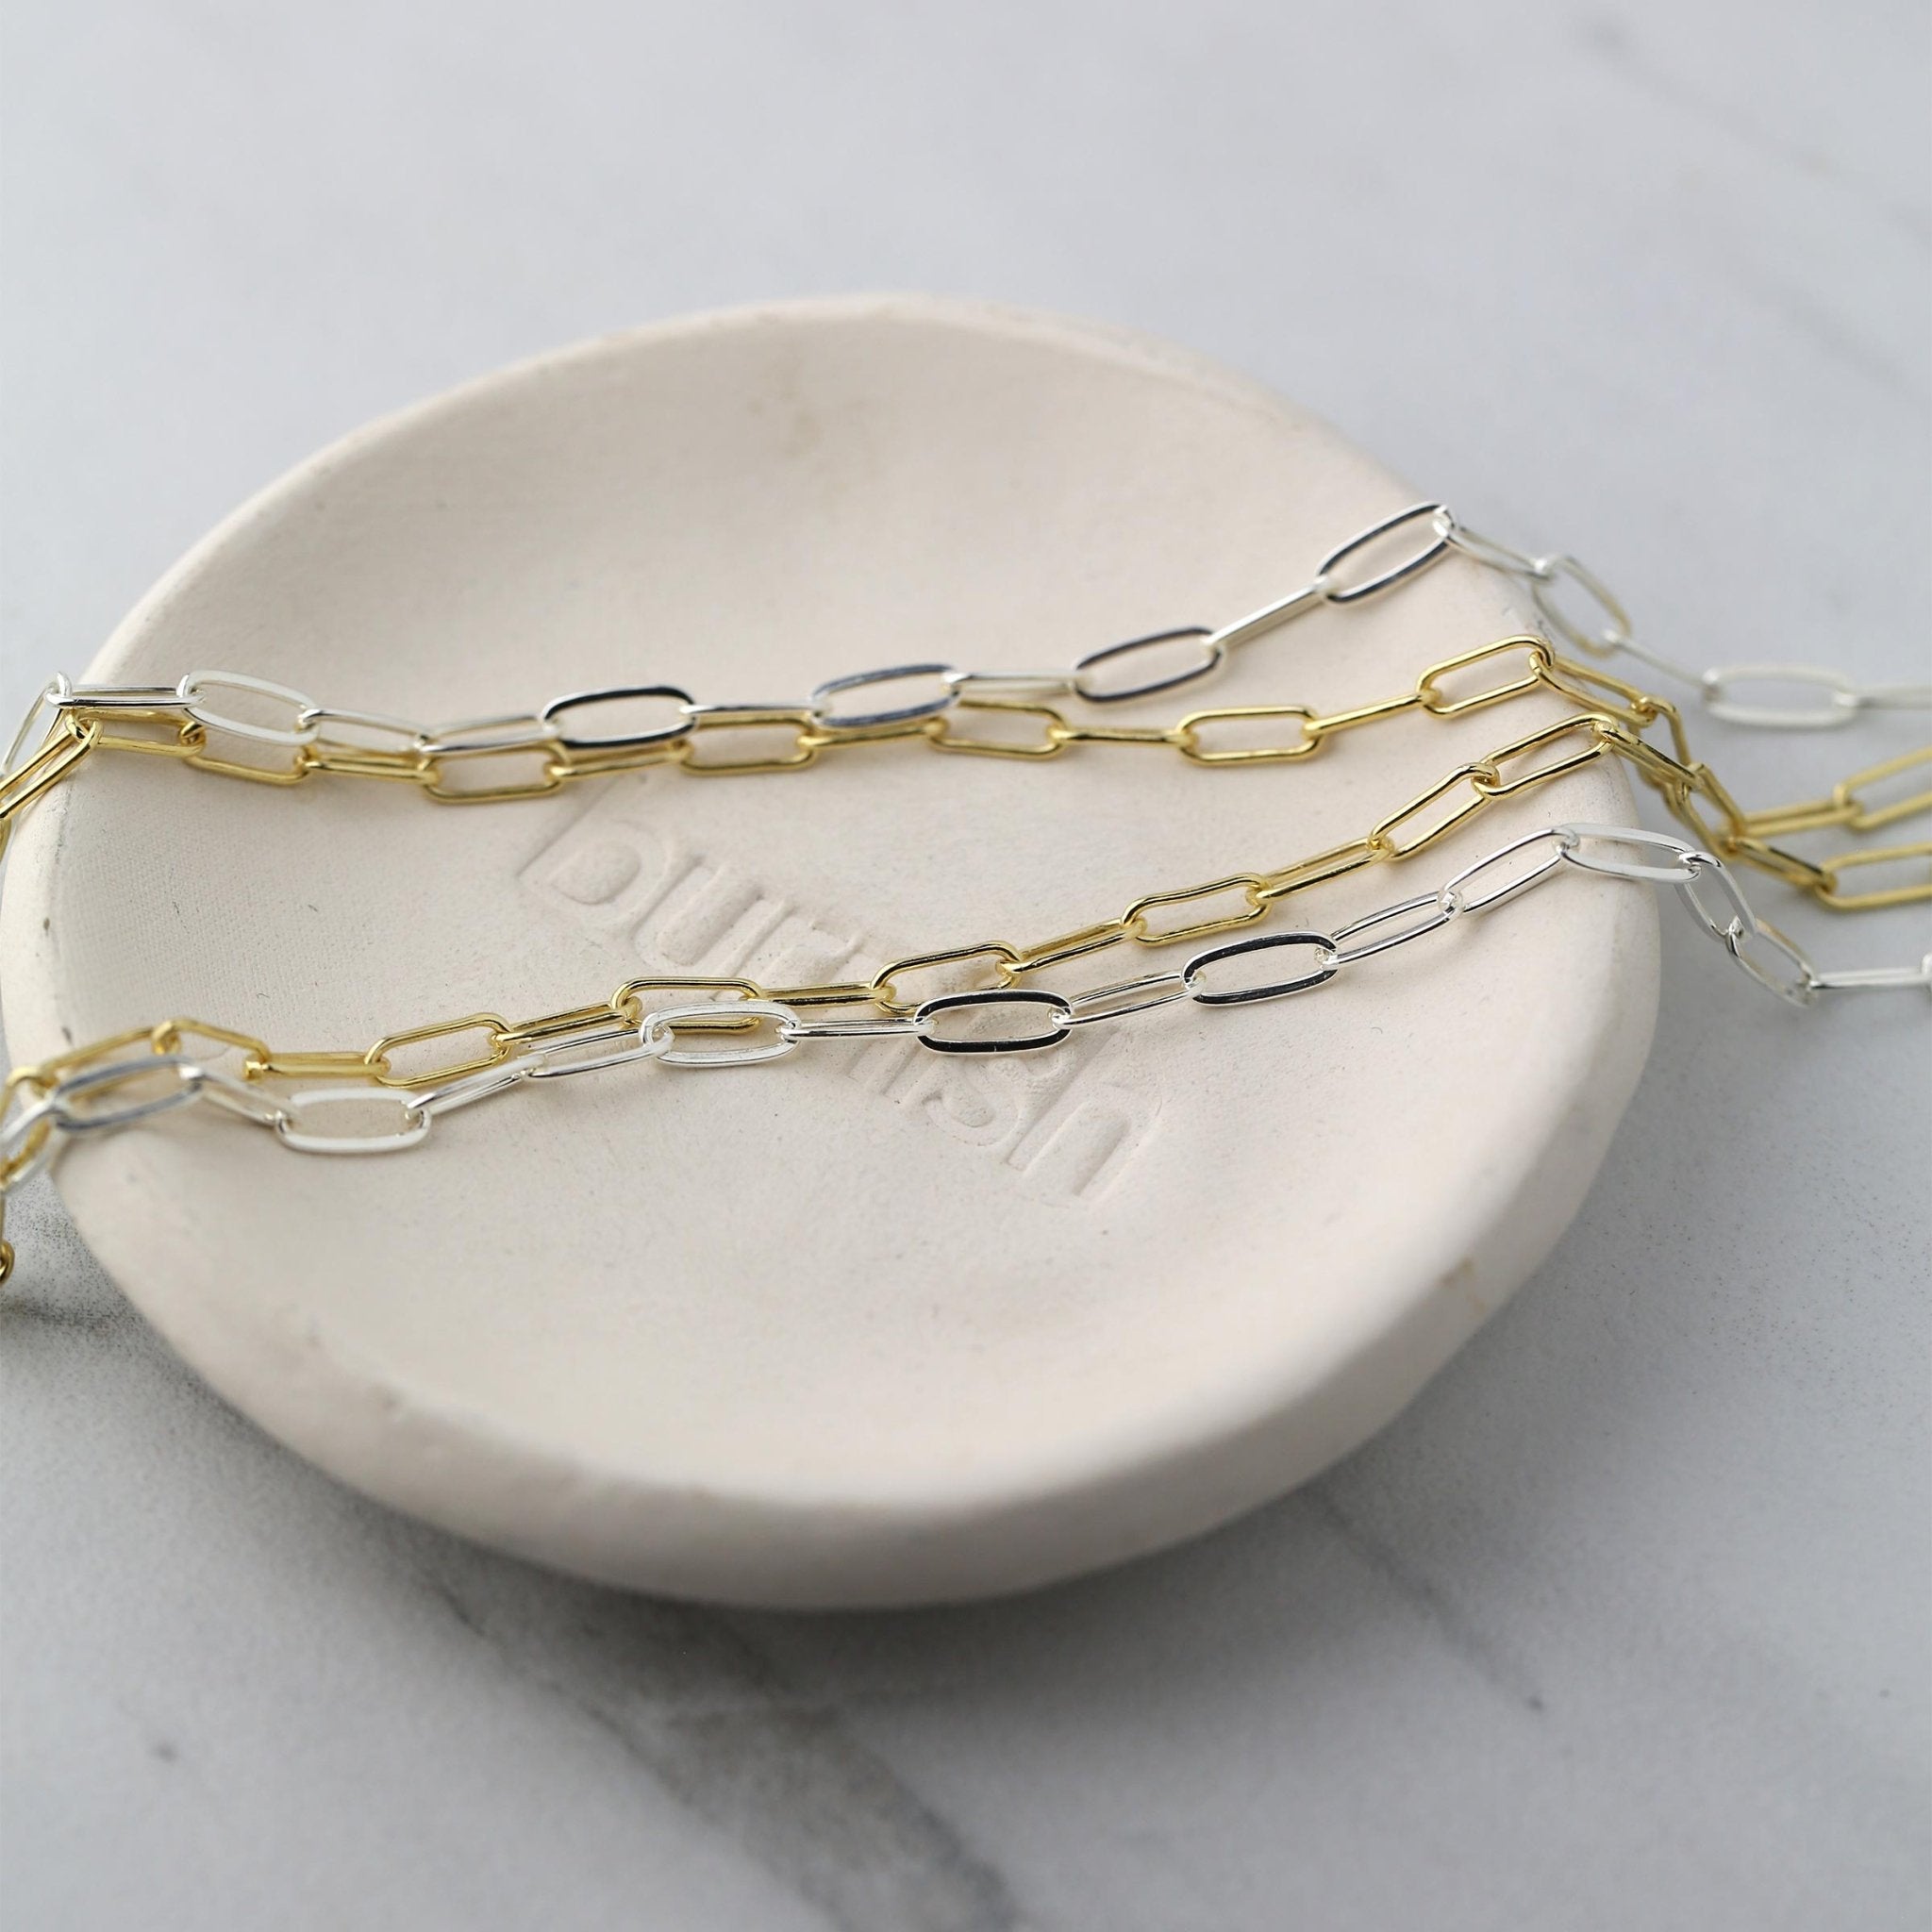 Elegant Elongated Link Chain Necklace handmade by Burnish